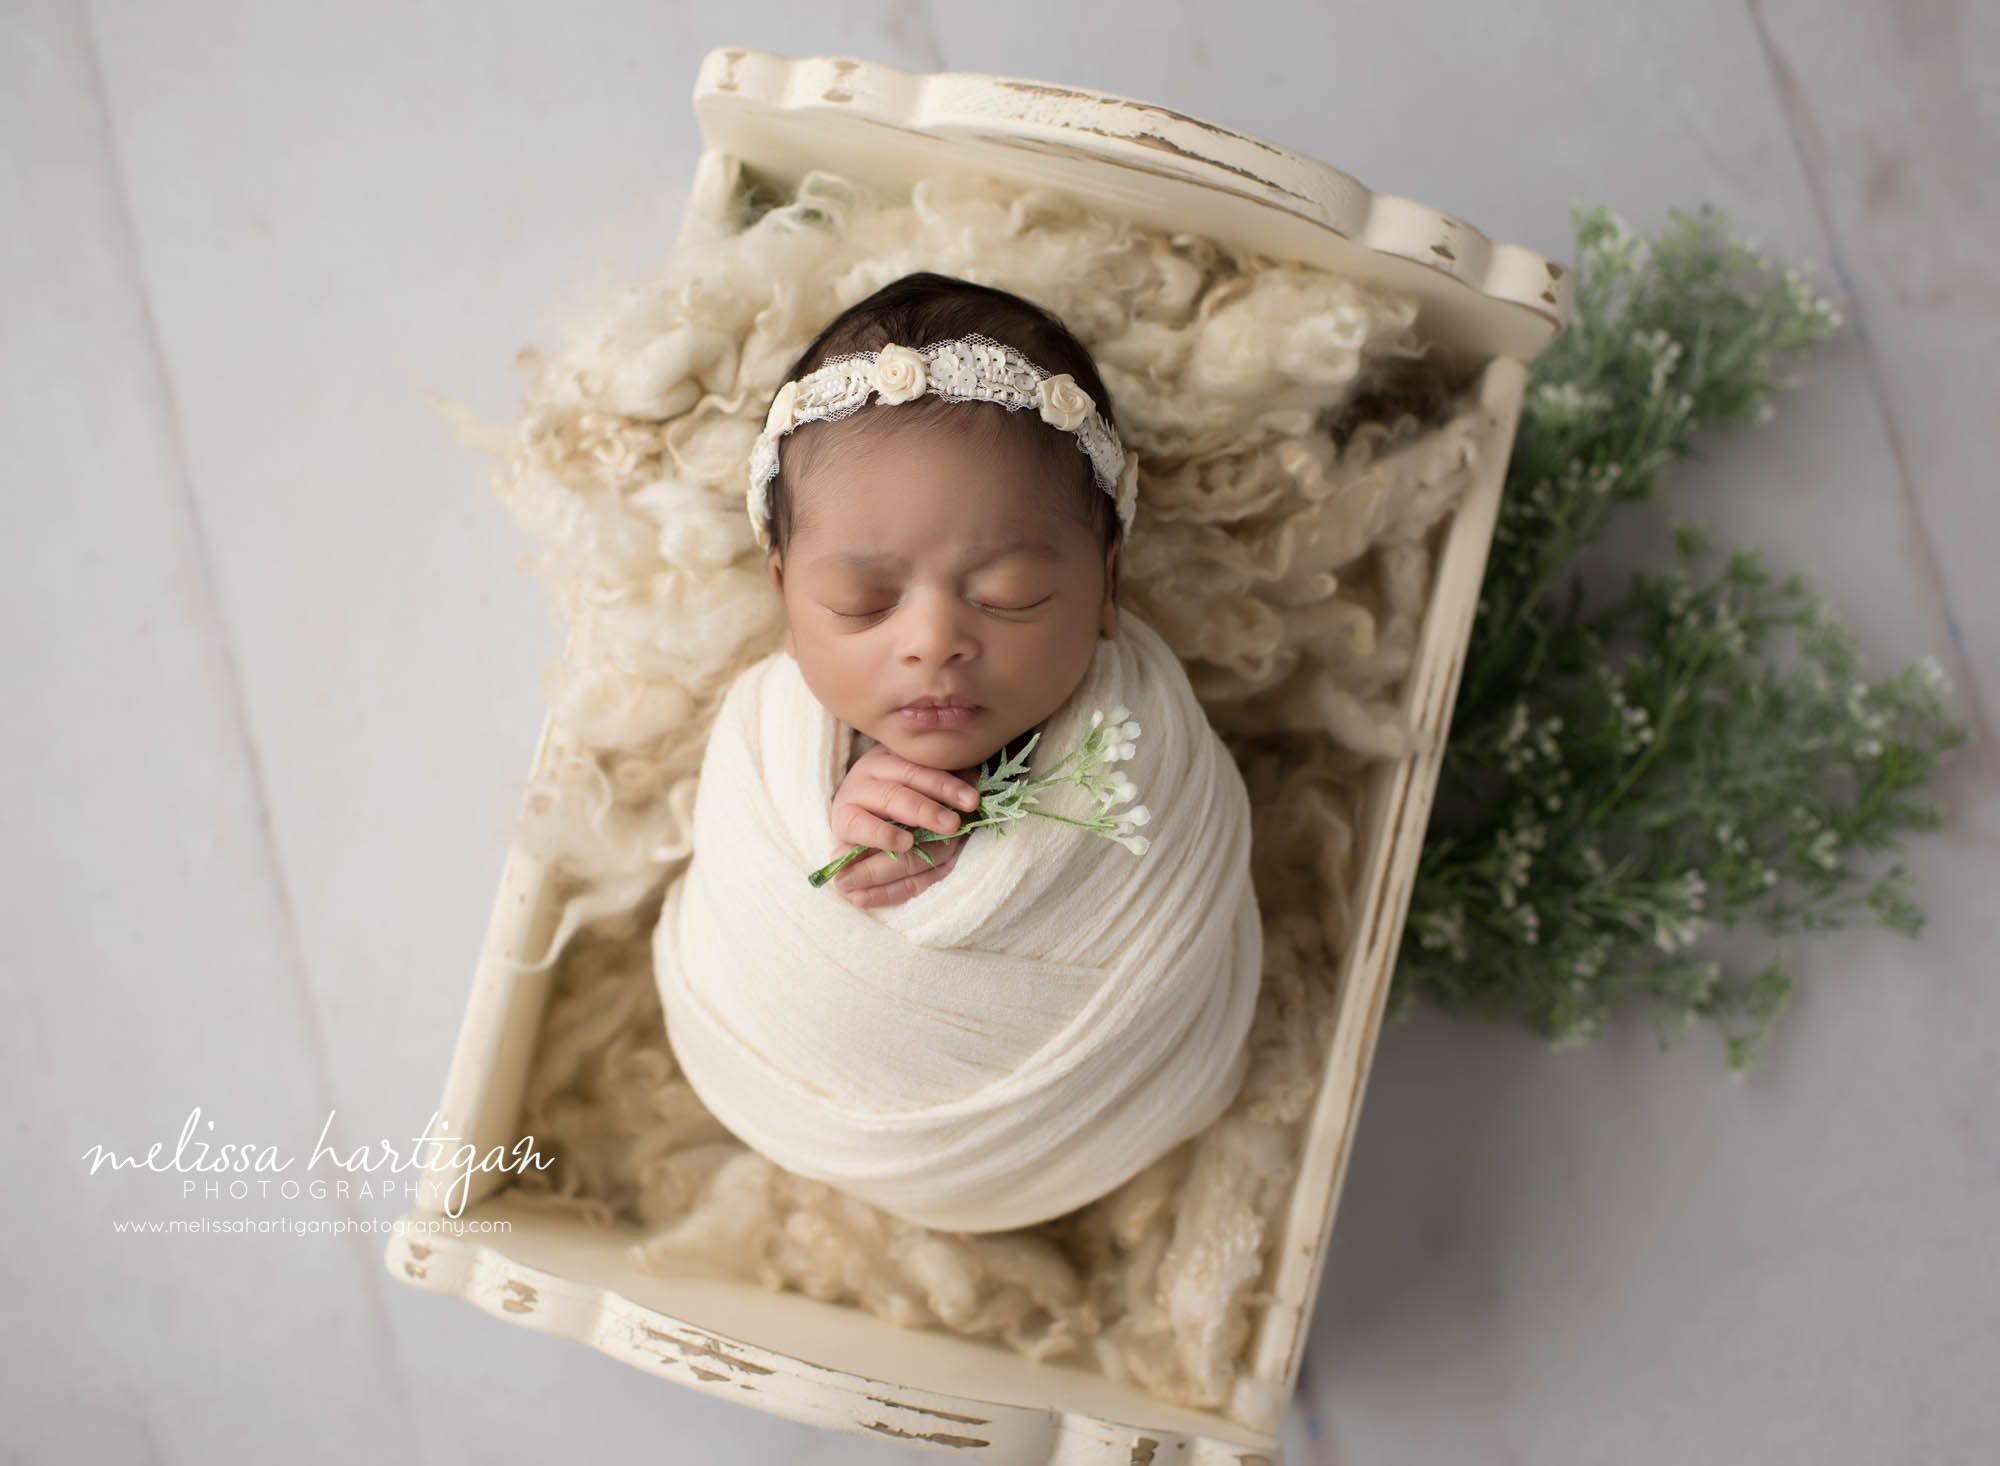 newborn baby girl posed in cradle with cream wrap cream headband and holding green flower stem CT newborn photography